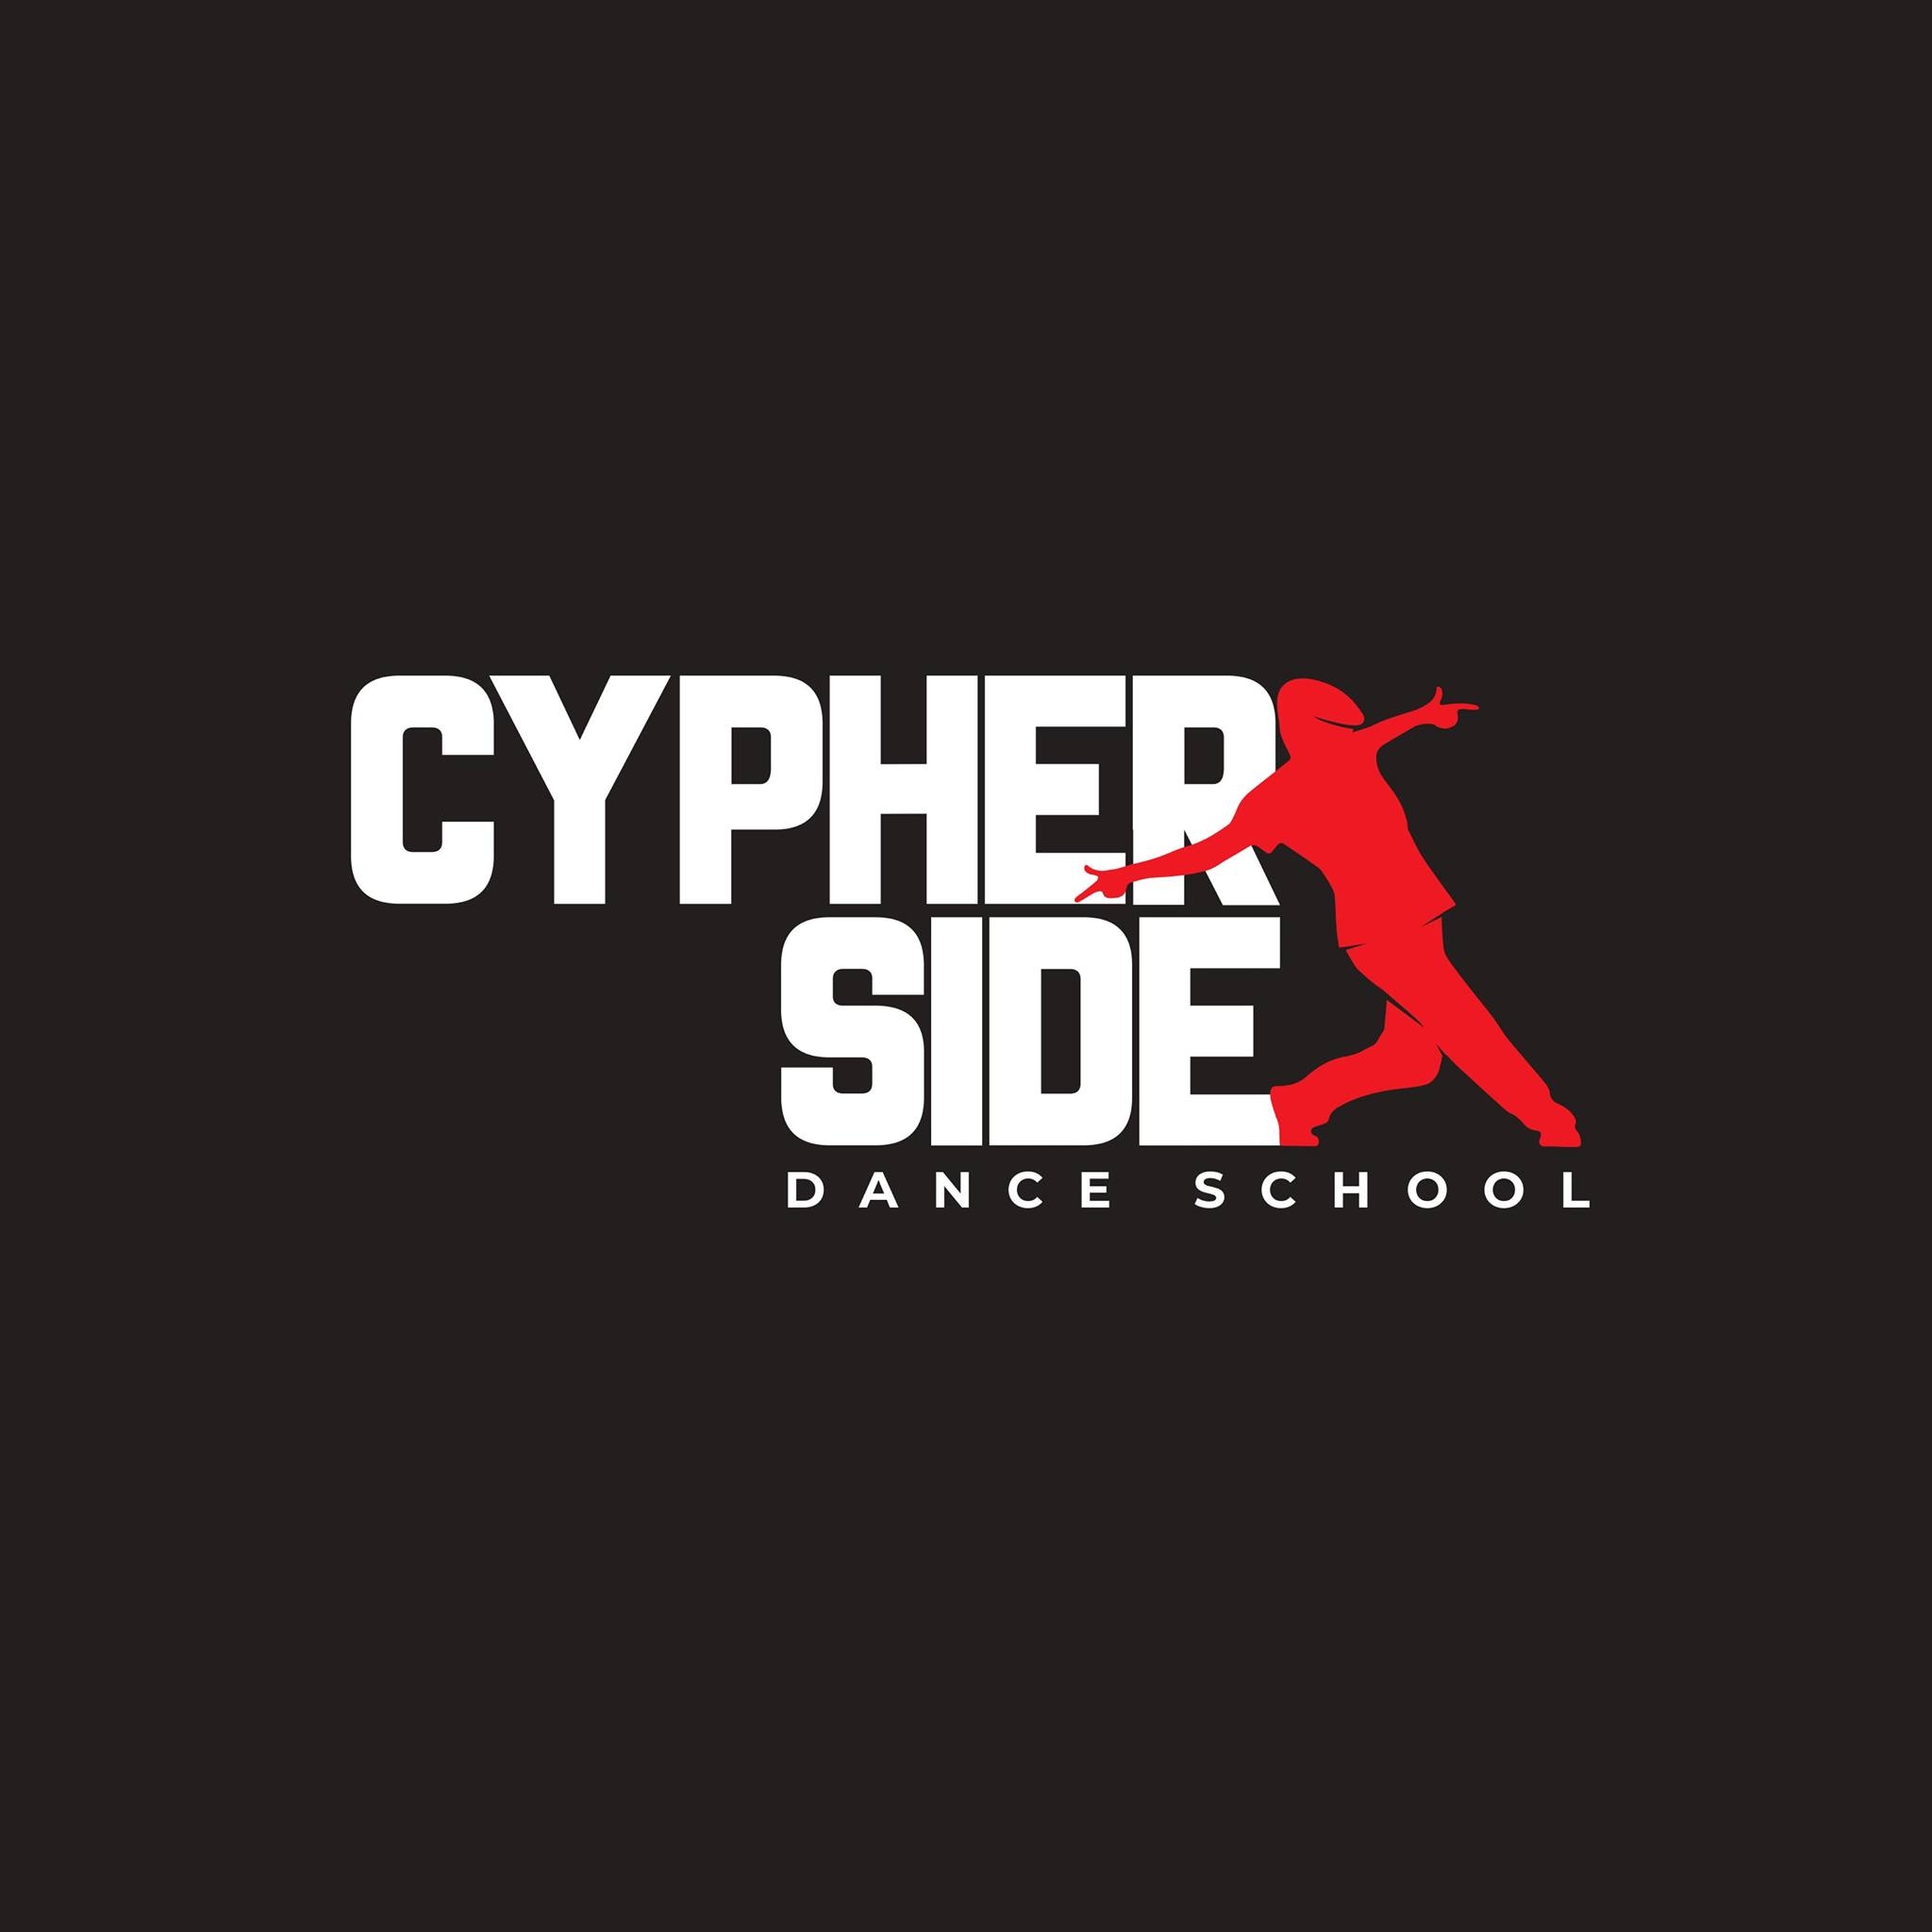 Cypher Side Dance School